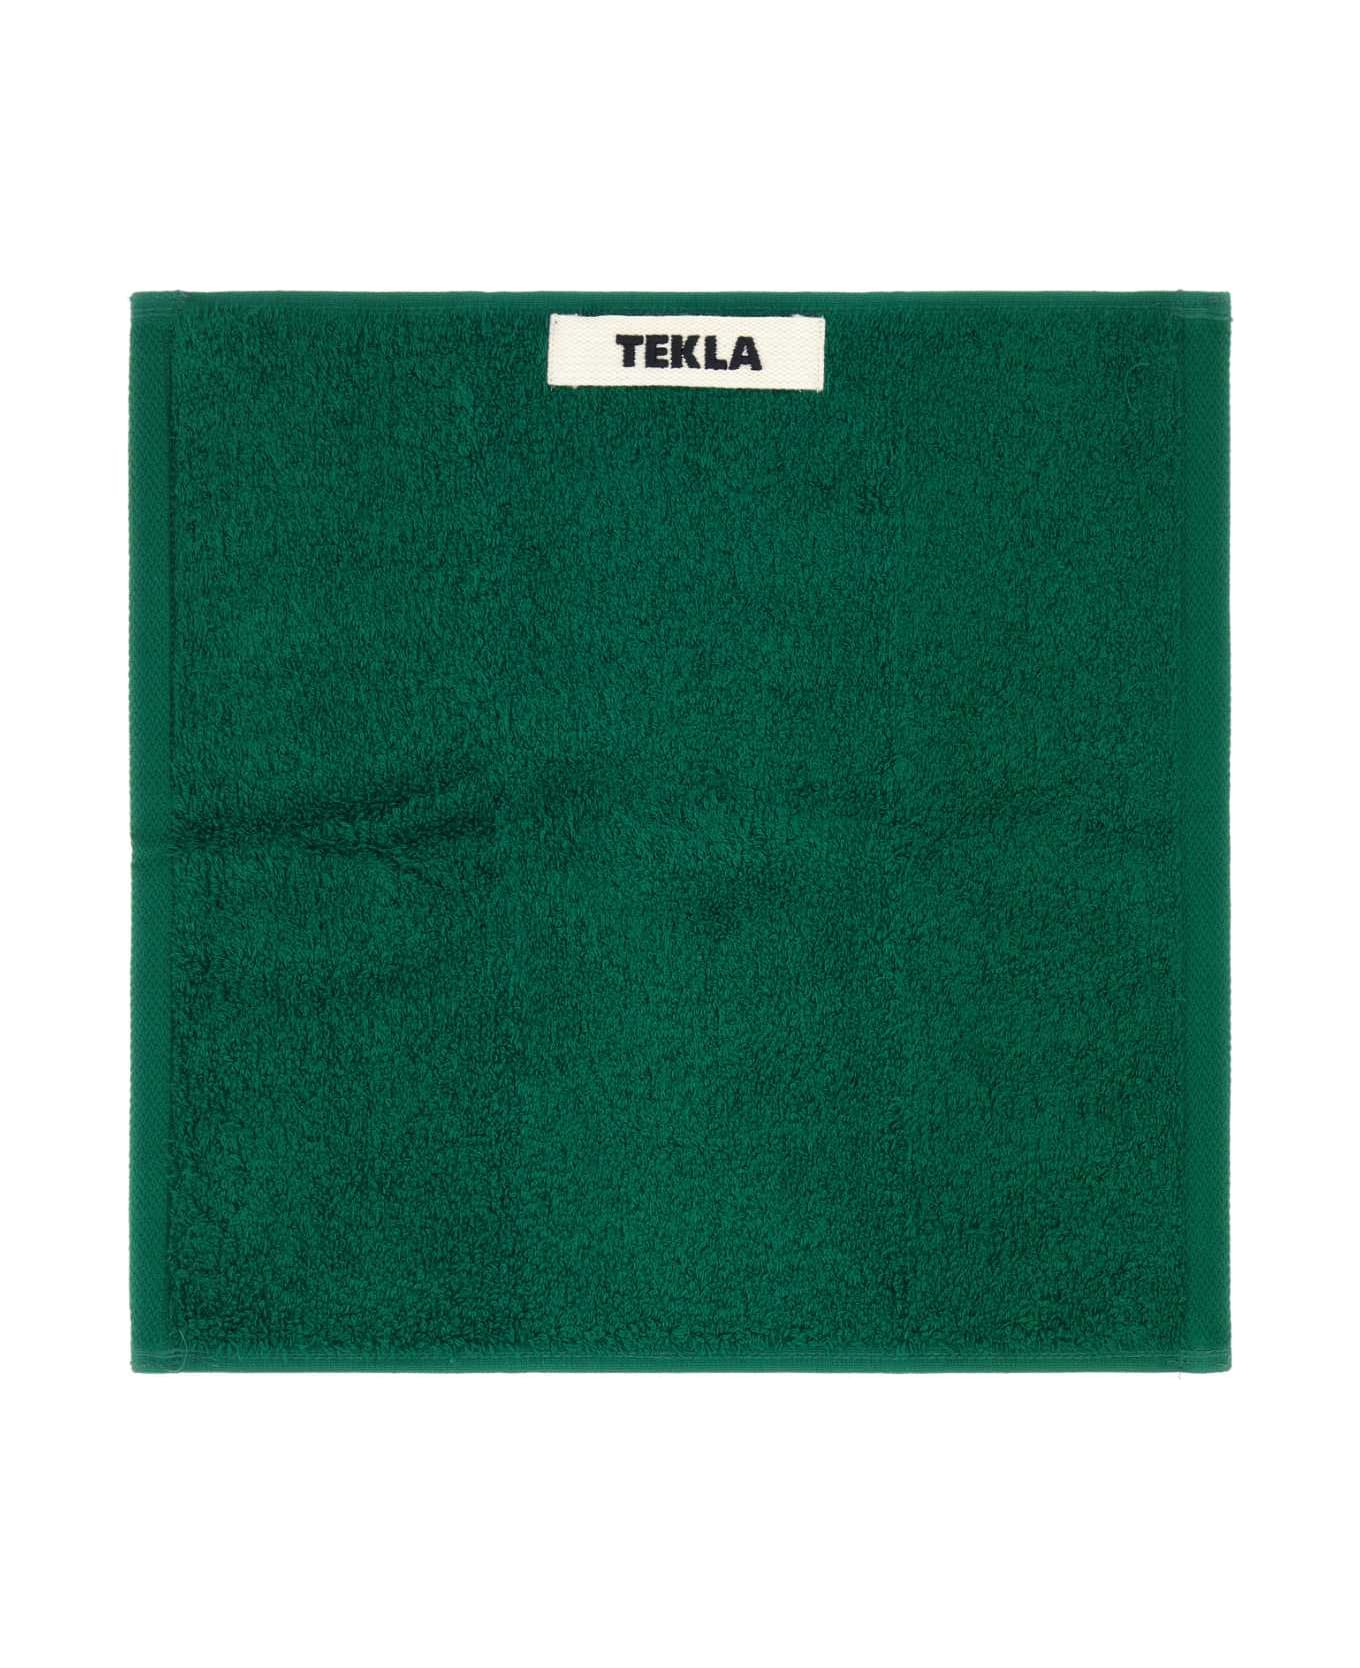 Tekla Green Terry Towel - TEALGREEN